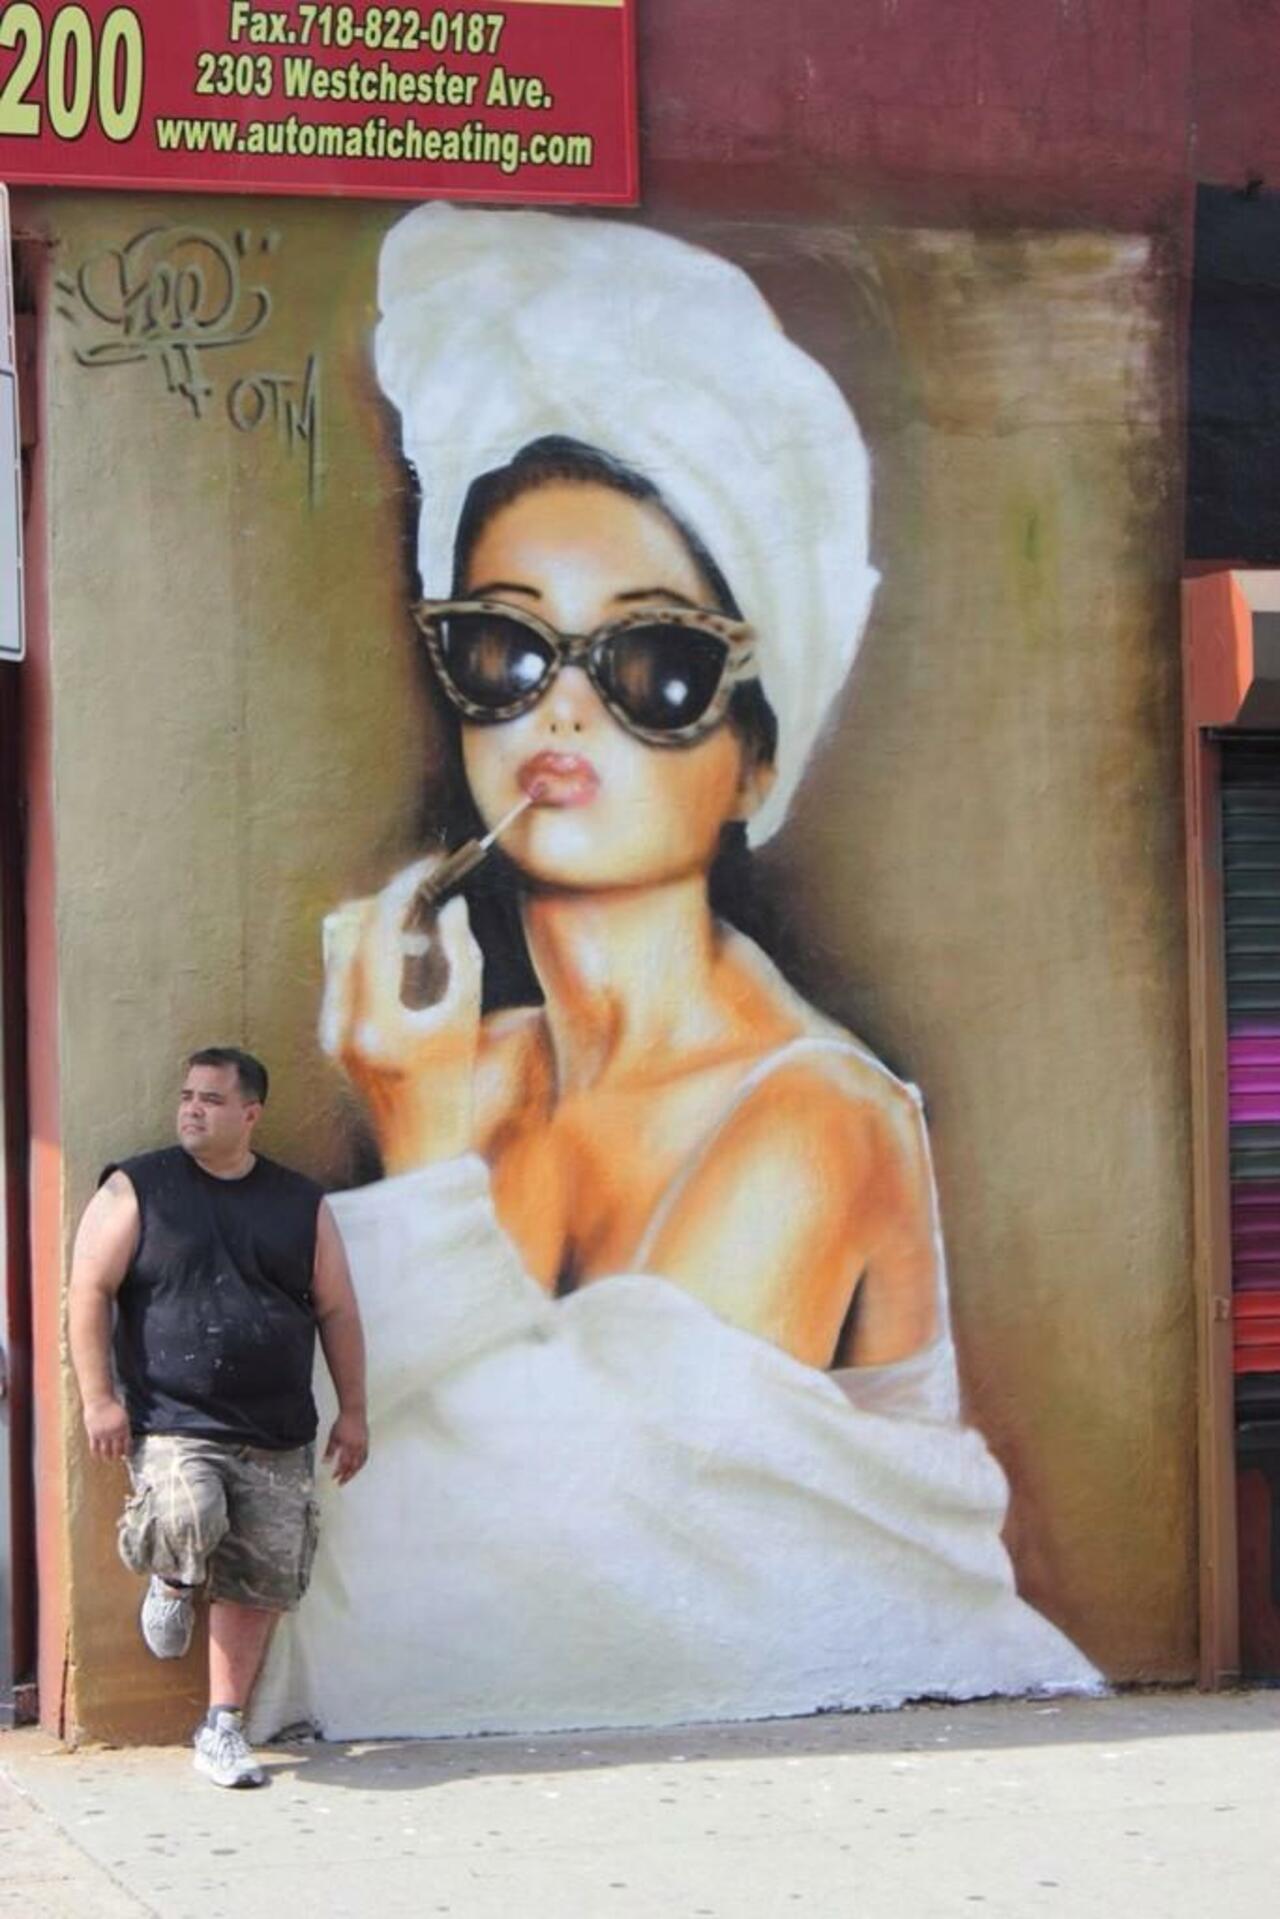 MT "@GoogleStreetArt: Artist 'see_tf' Street Art portrait located in The Bronx, #NY  

#graffiti #mural #streetart http://t.co/AMDvKH7ZMg”